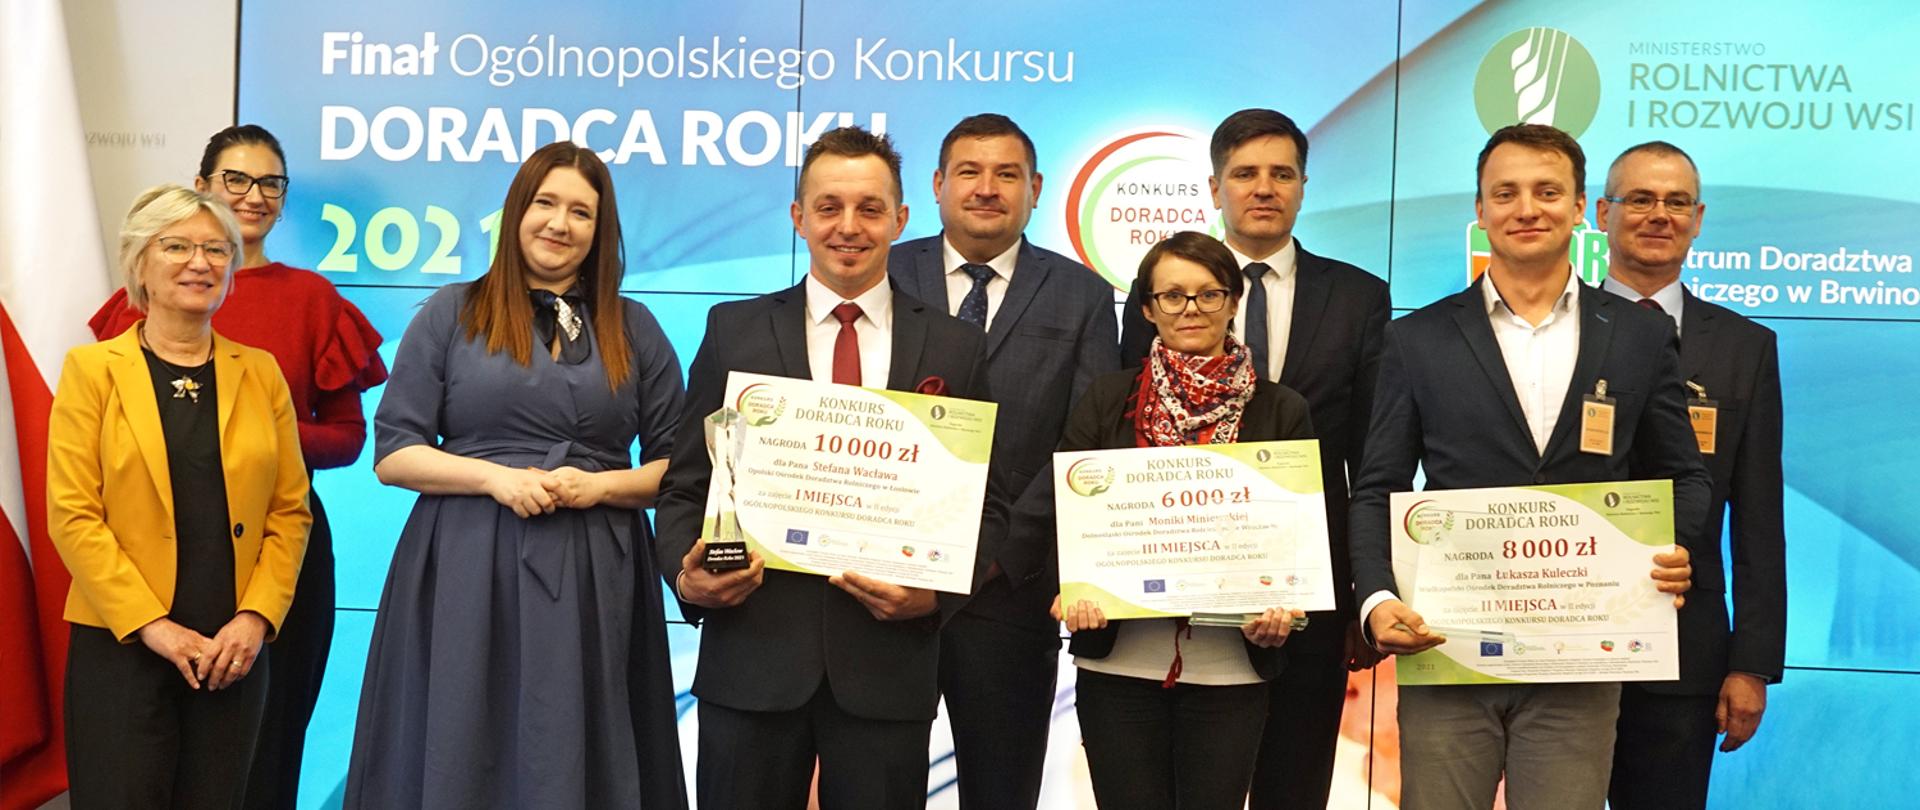 Sekretarz stanu Anna Gembicka stojąca wśród laureatów Konkursu